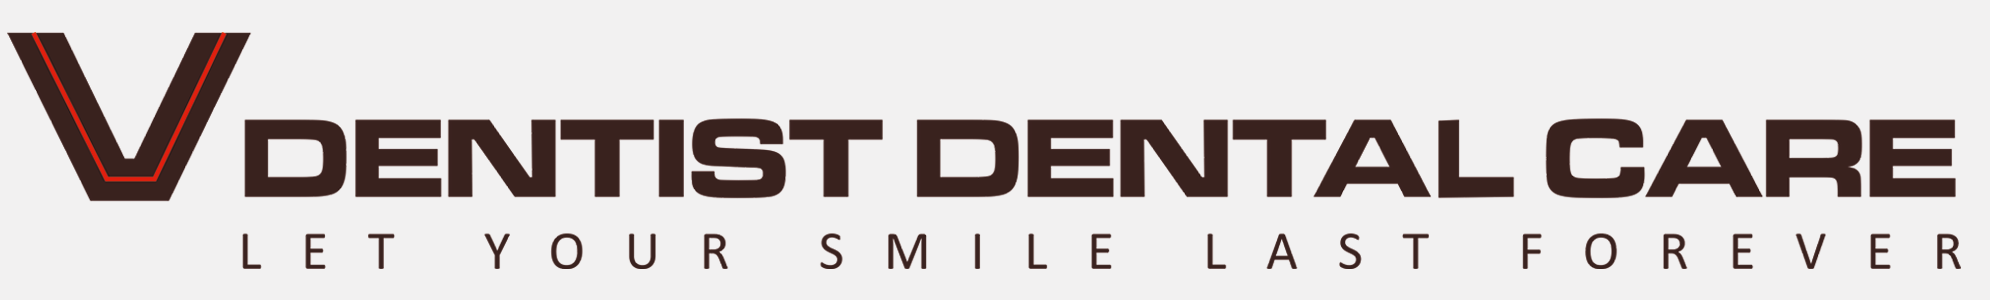 V Dentist Dental care Implant and laser Dentistry Logo